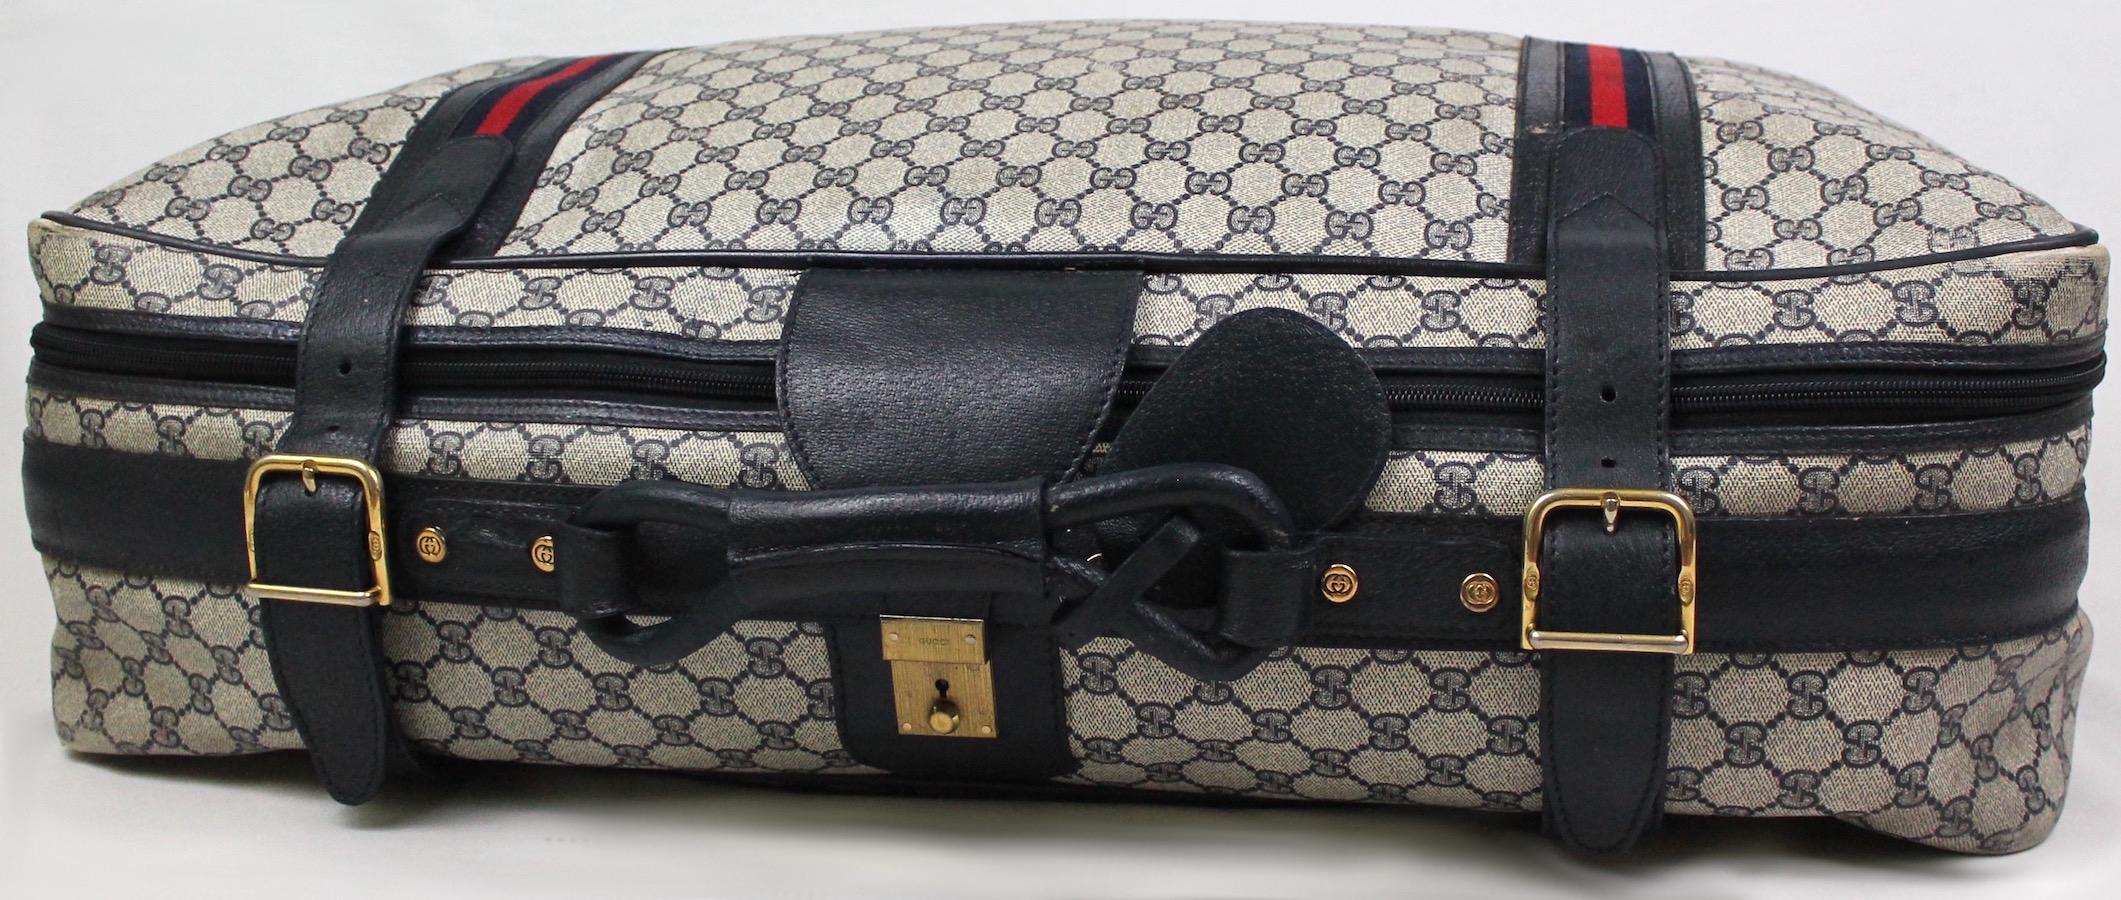 Gucci Guccissima Canvas & Leather Luggage Suitcase, c. 1980's, 16